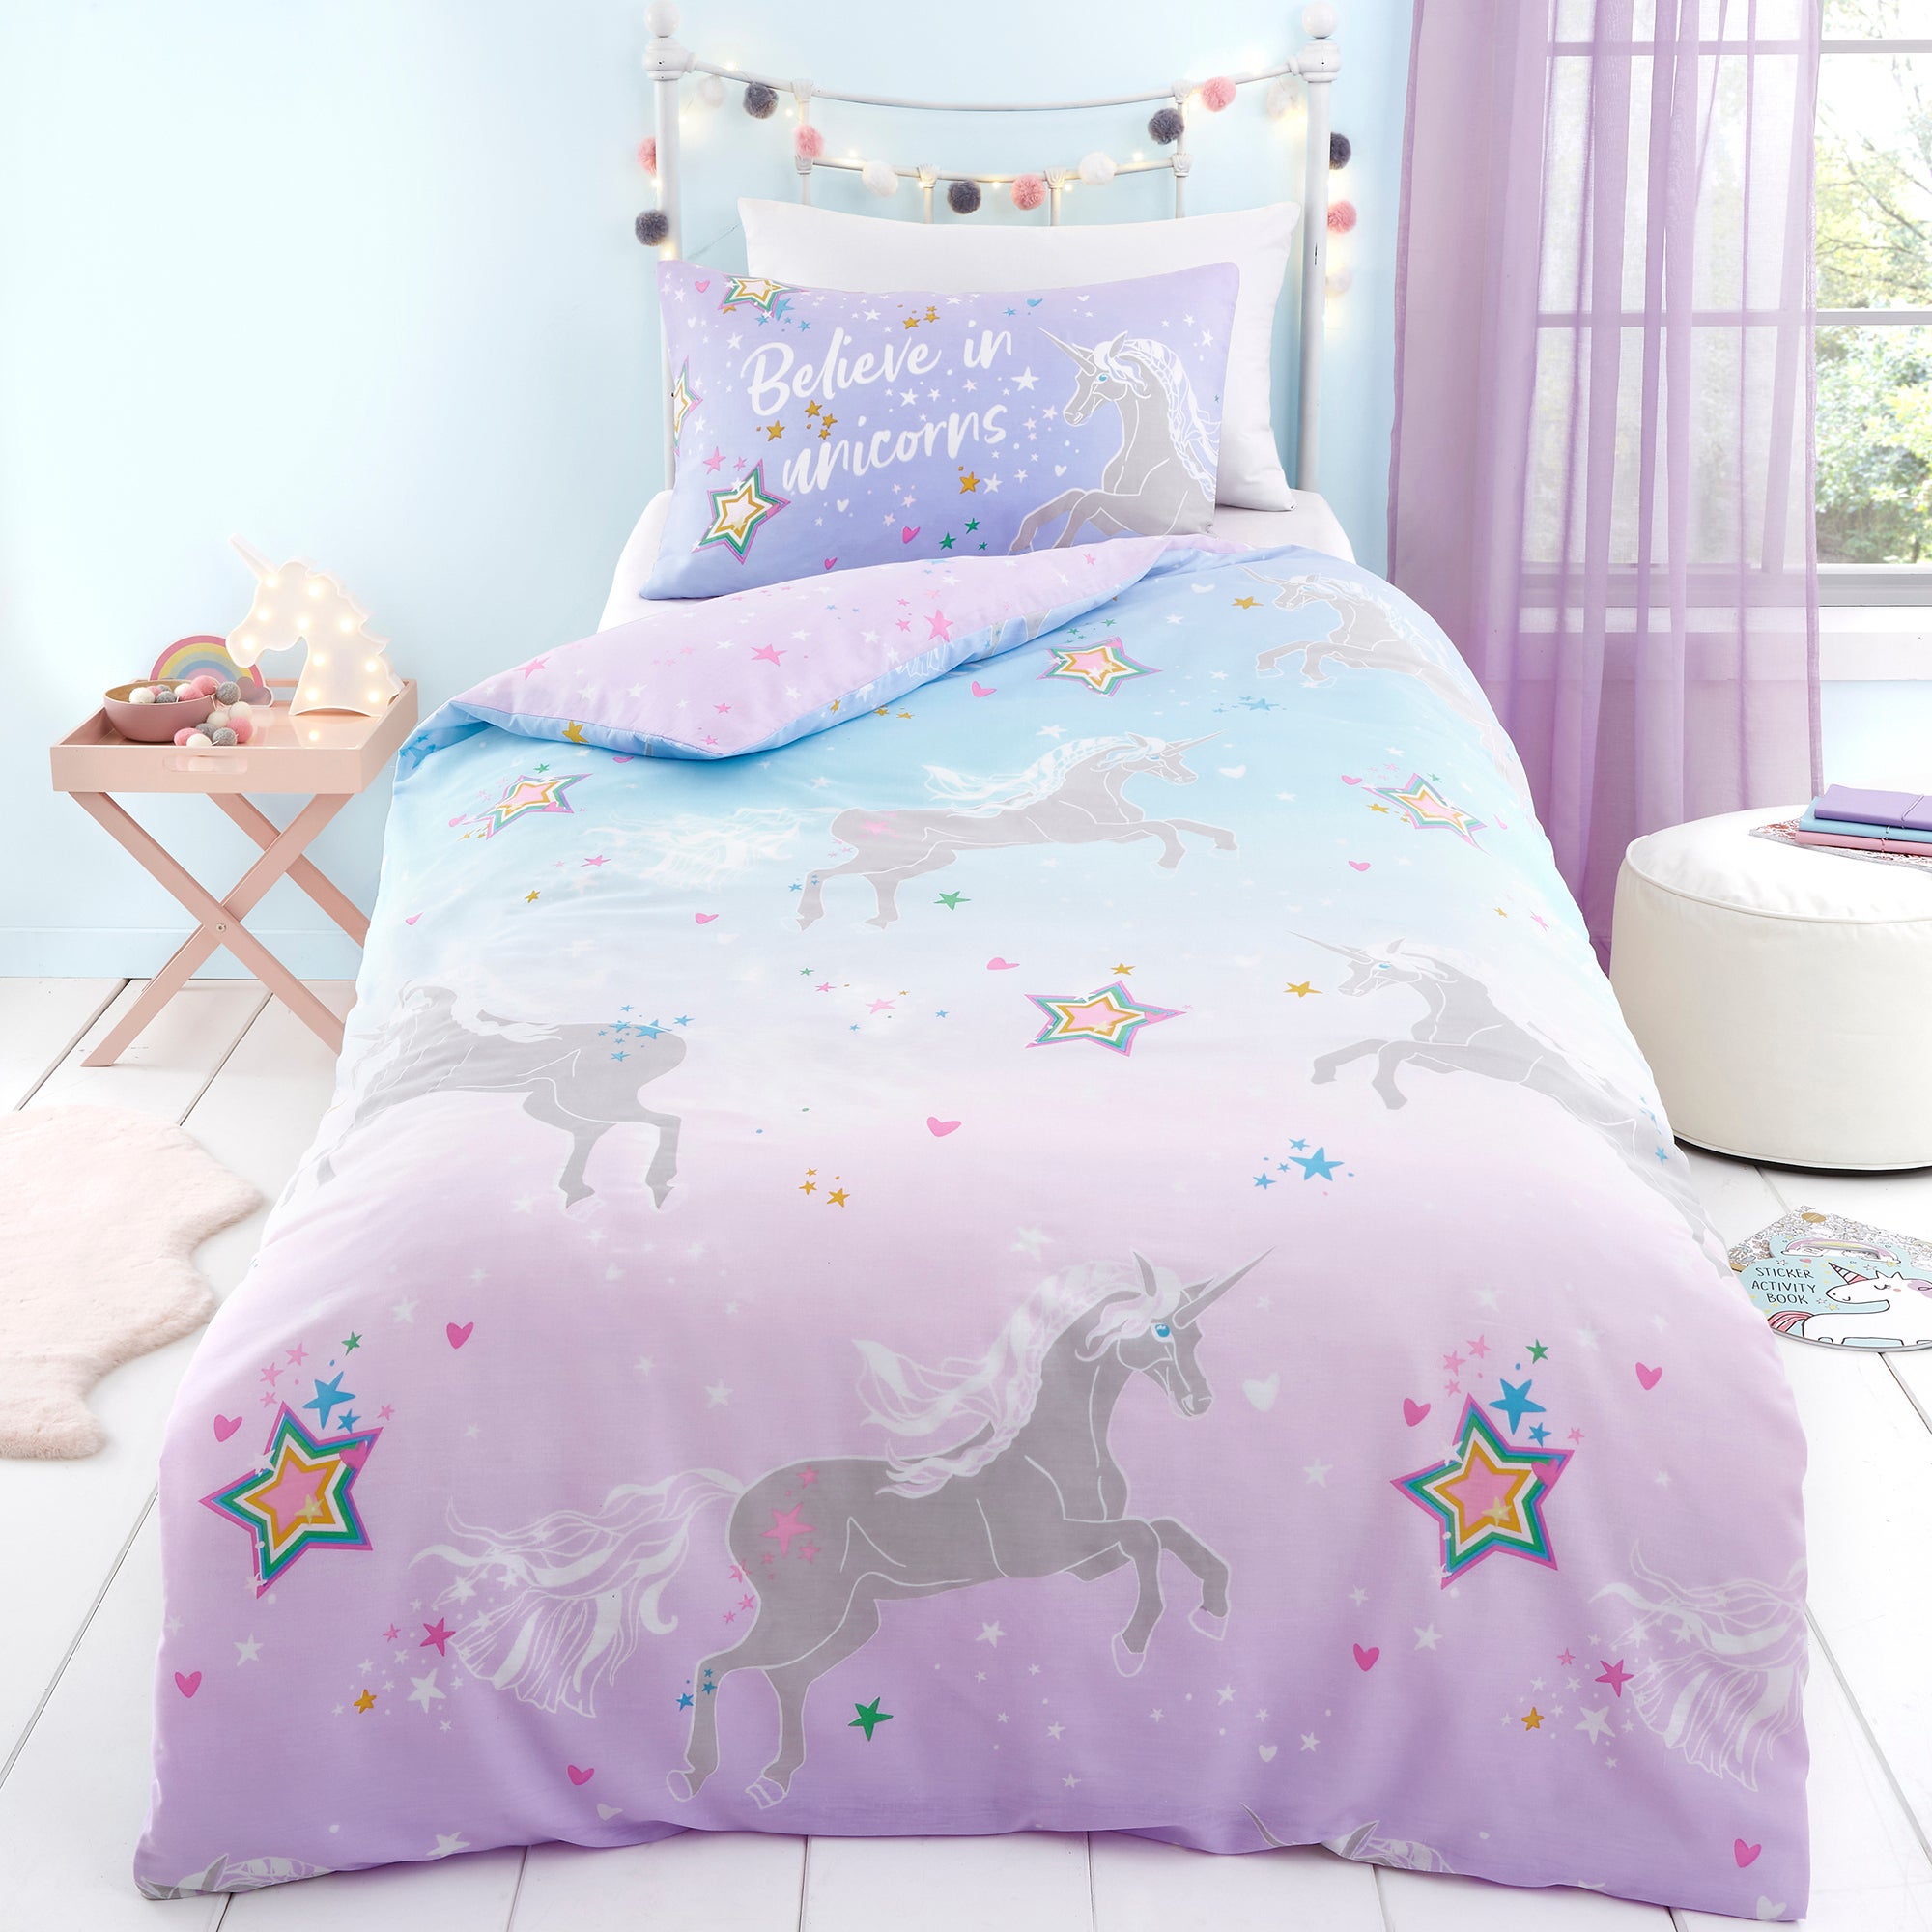 Ombre Unicorn Single Duvet Cover & Pillowcase Set